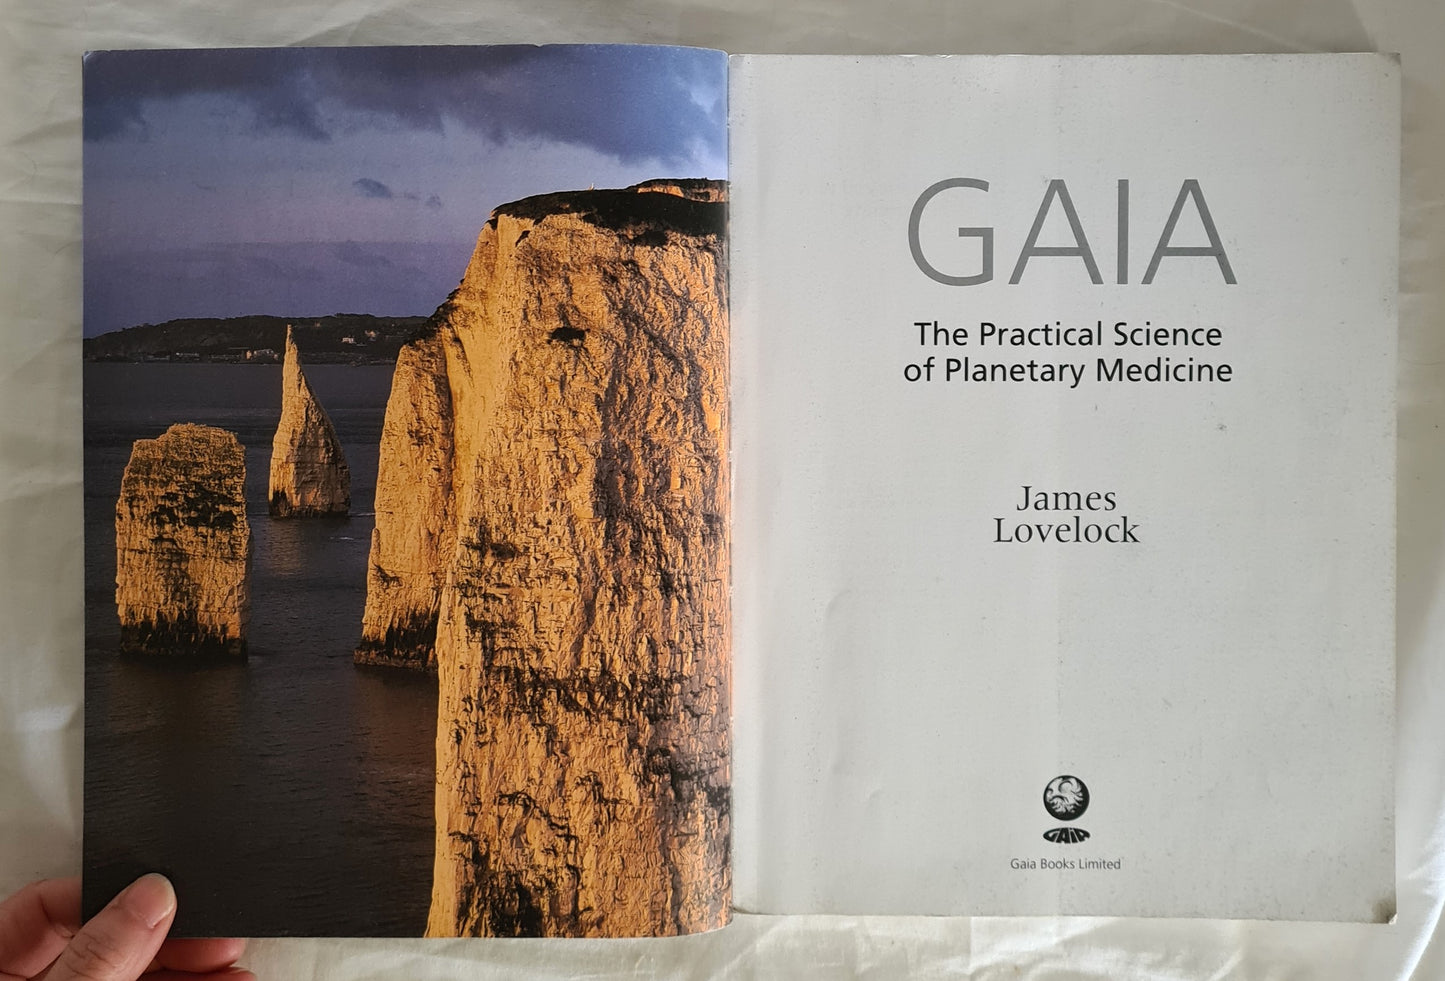 Gaia by James Lovelock